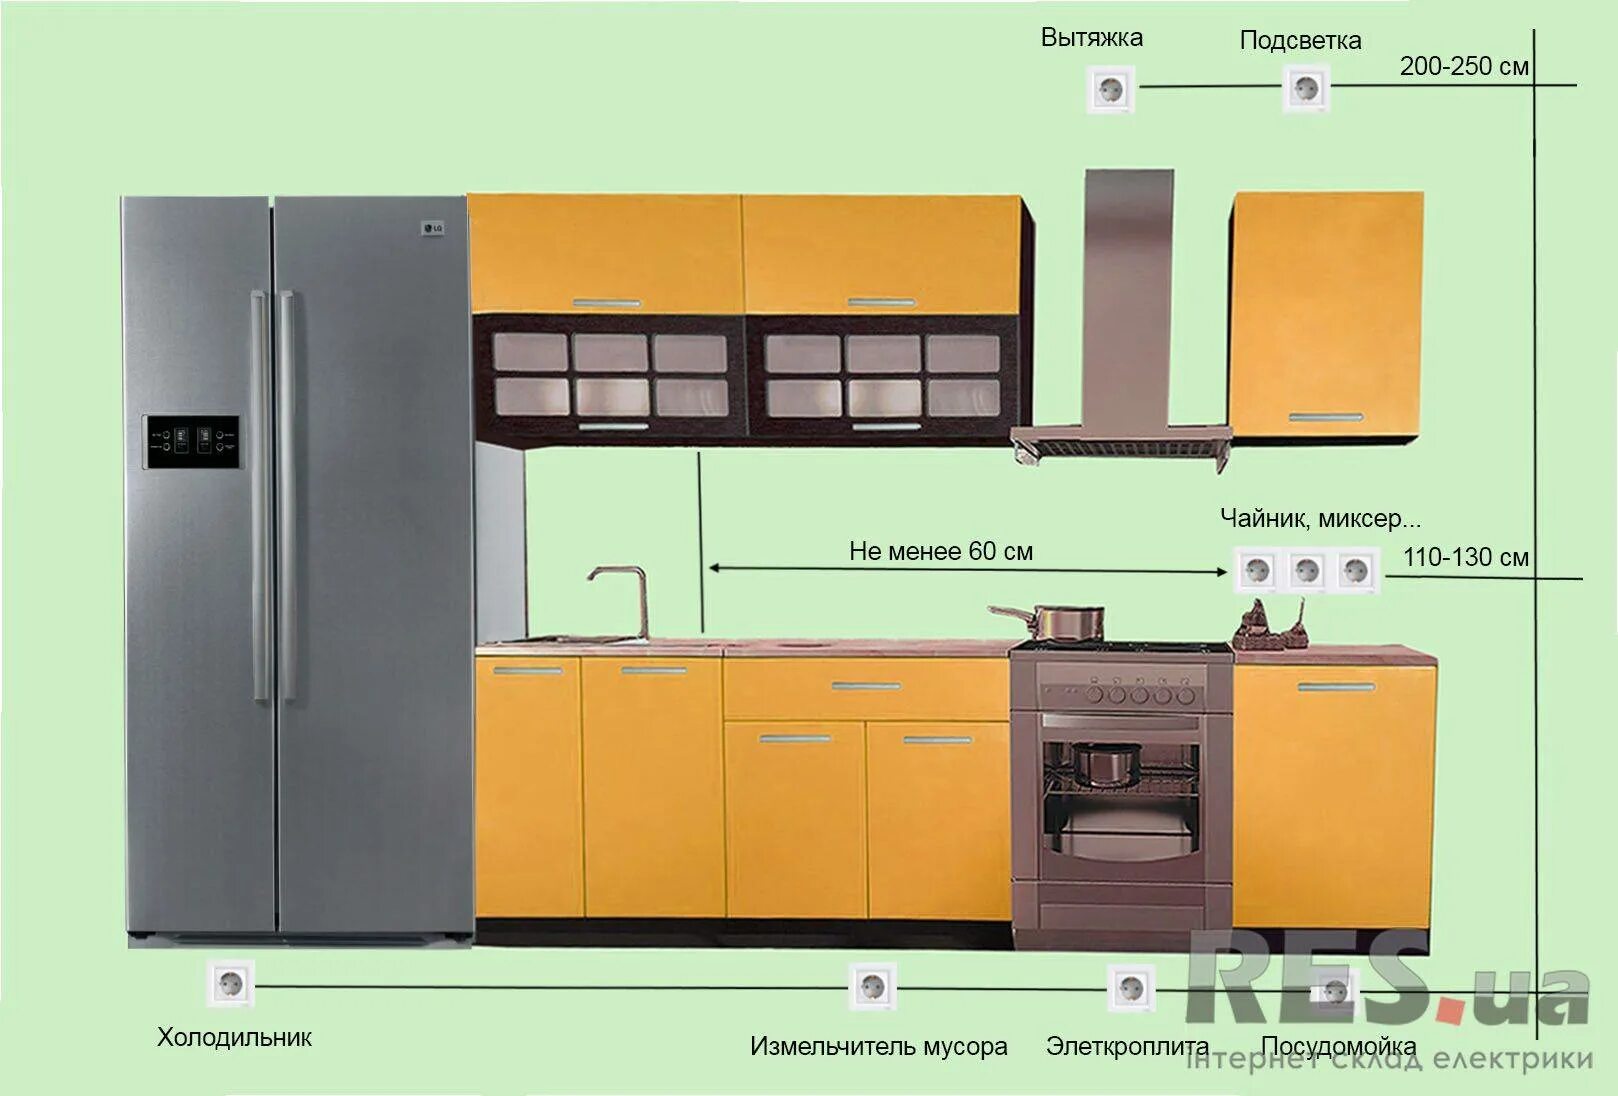 Розетки на кухне кухонный гарнитур. Схема расположения розеток на кухне. Розетки в кухонном гарнитуре. Розетки под кухонный гарнитур.